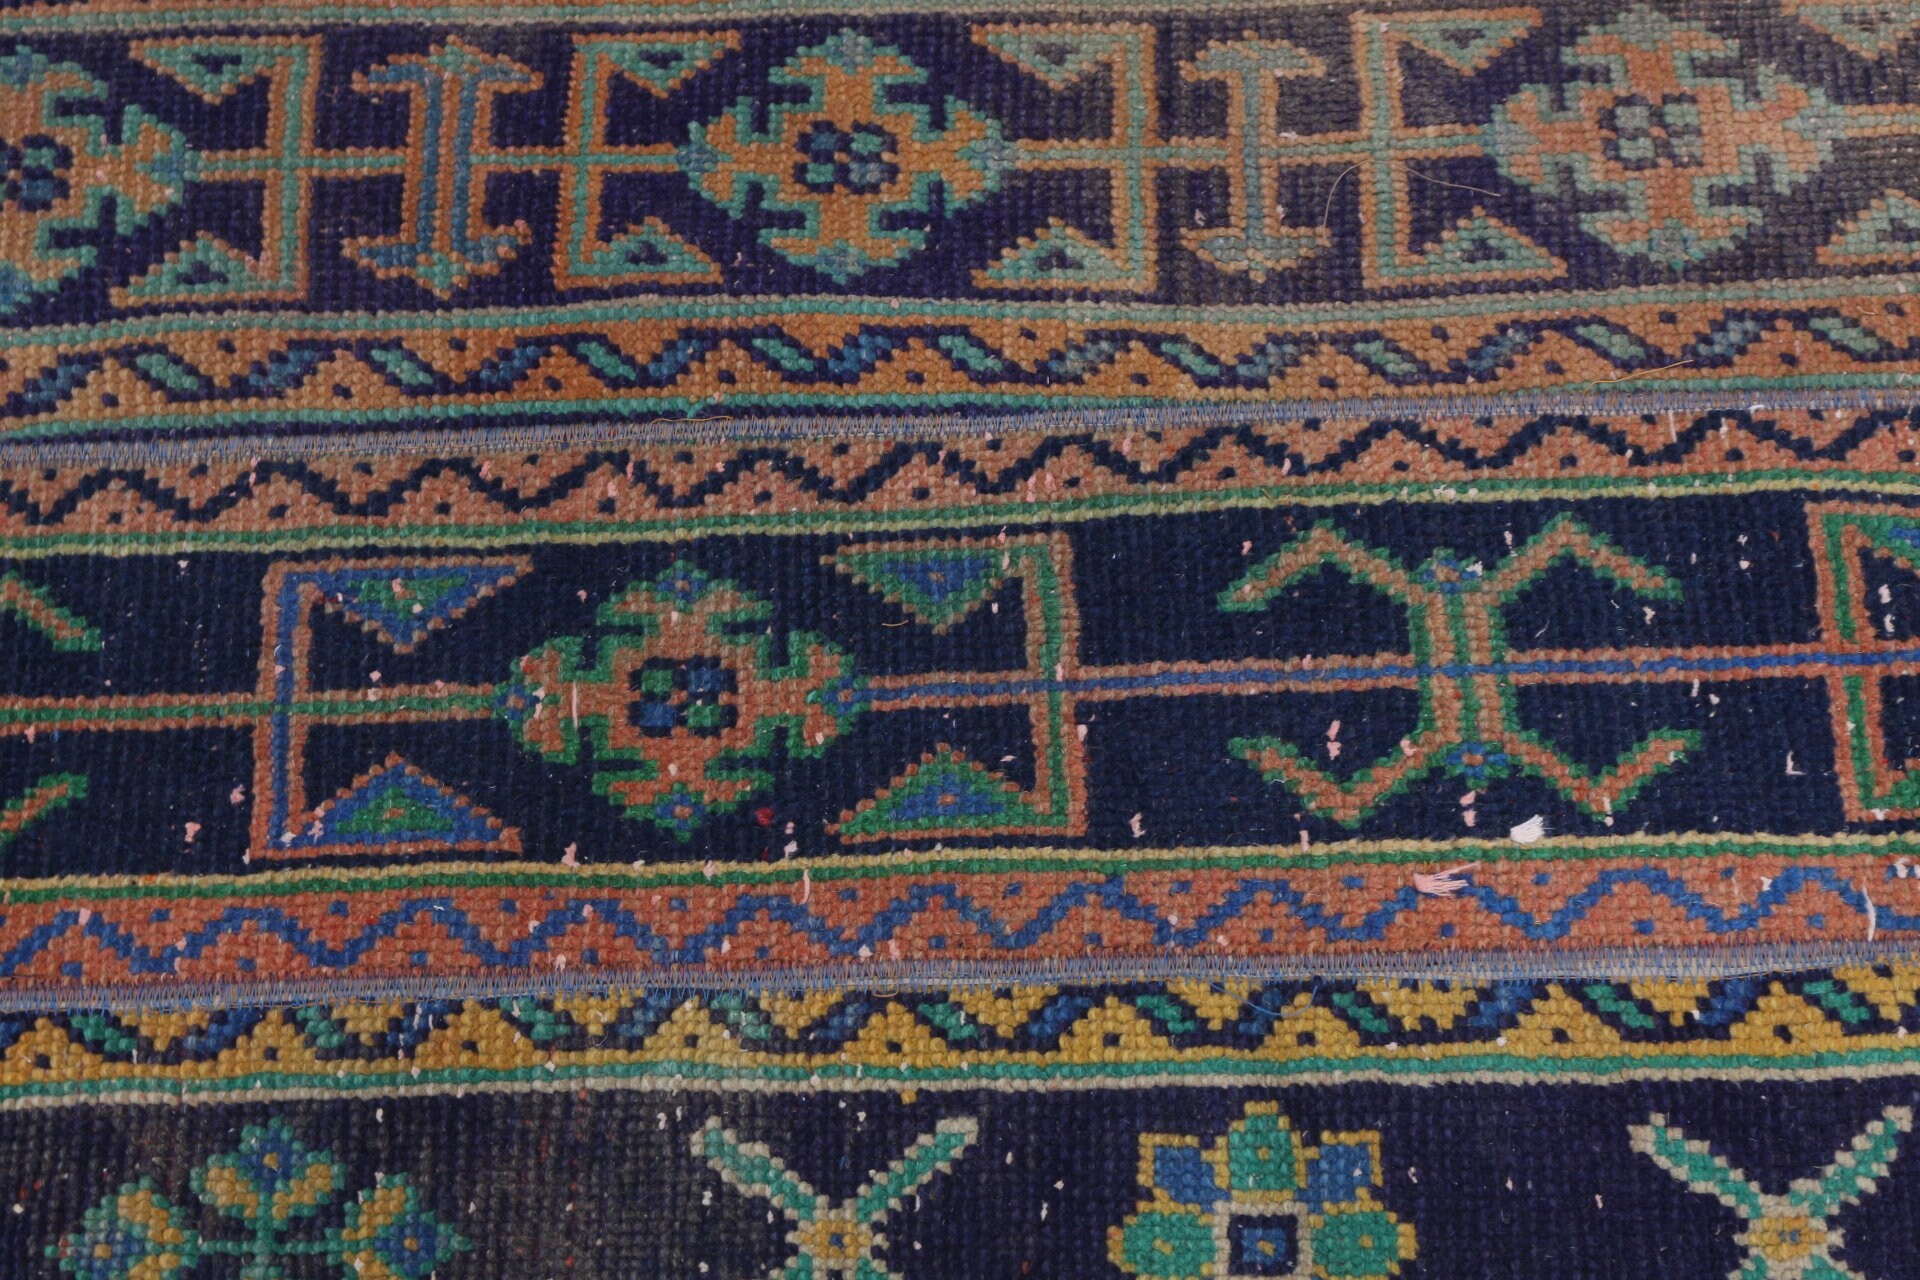 Entry Rugs, Turkish Rug, Moroccan Rug, Vintage Rugs, Blue Home Decor Rug, Office Rug, 2.3x3.6 ft Small Rugs, Nursery Rug, Anatolian Rug